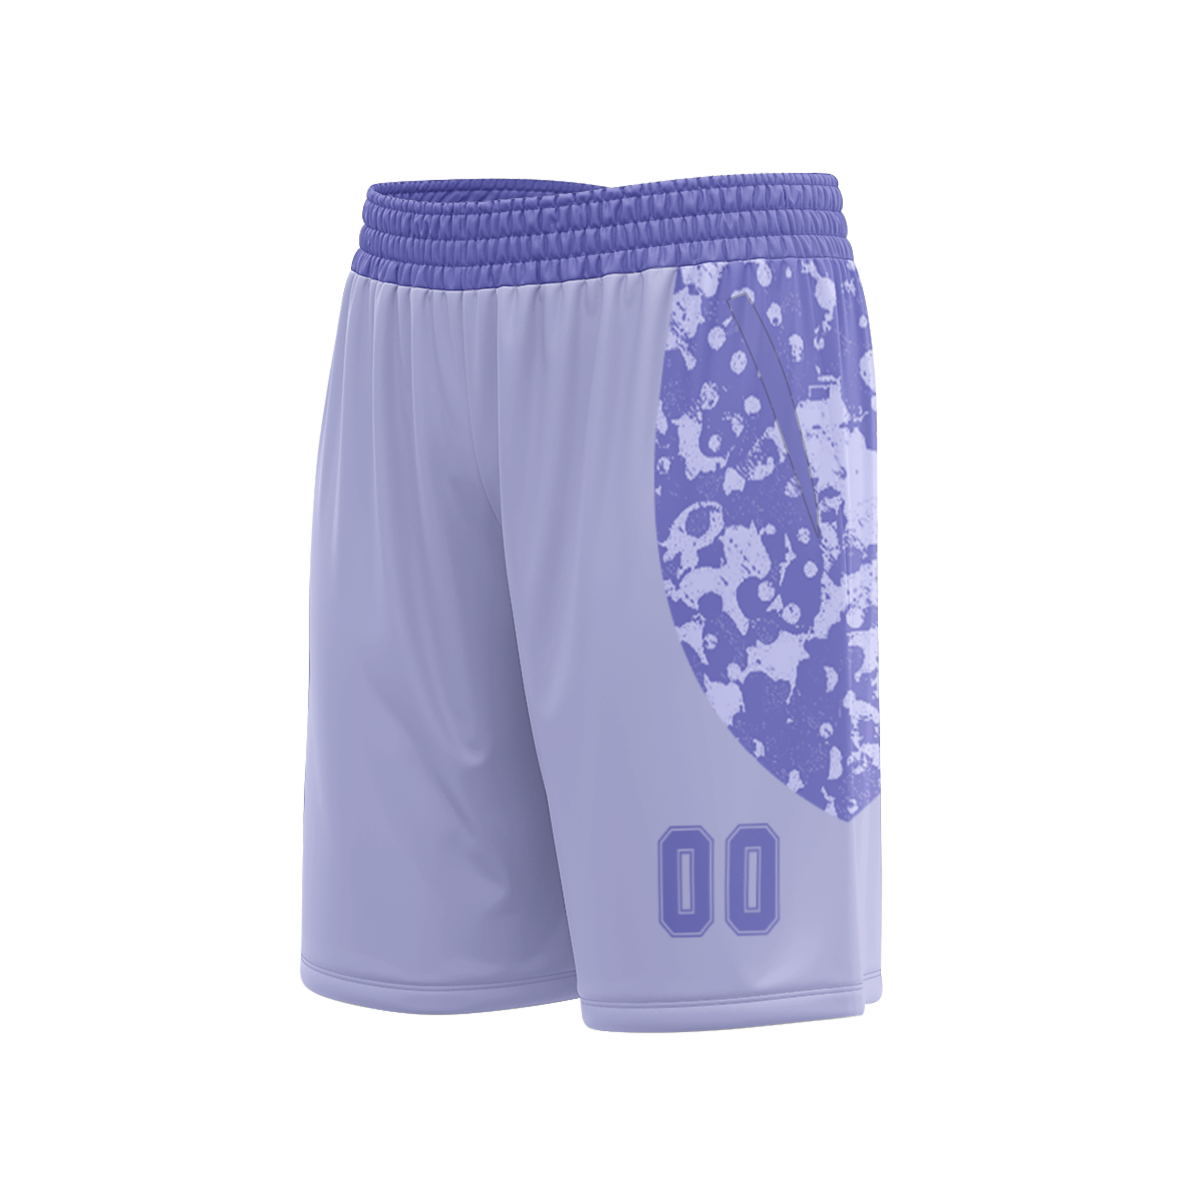 custom-cool-design-basketball-shirts-unisex-sublimation-print-on-demand-basketball-uniforms-at-cj-pod-8